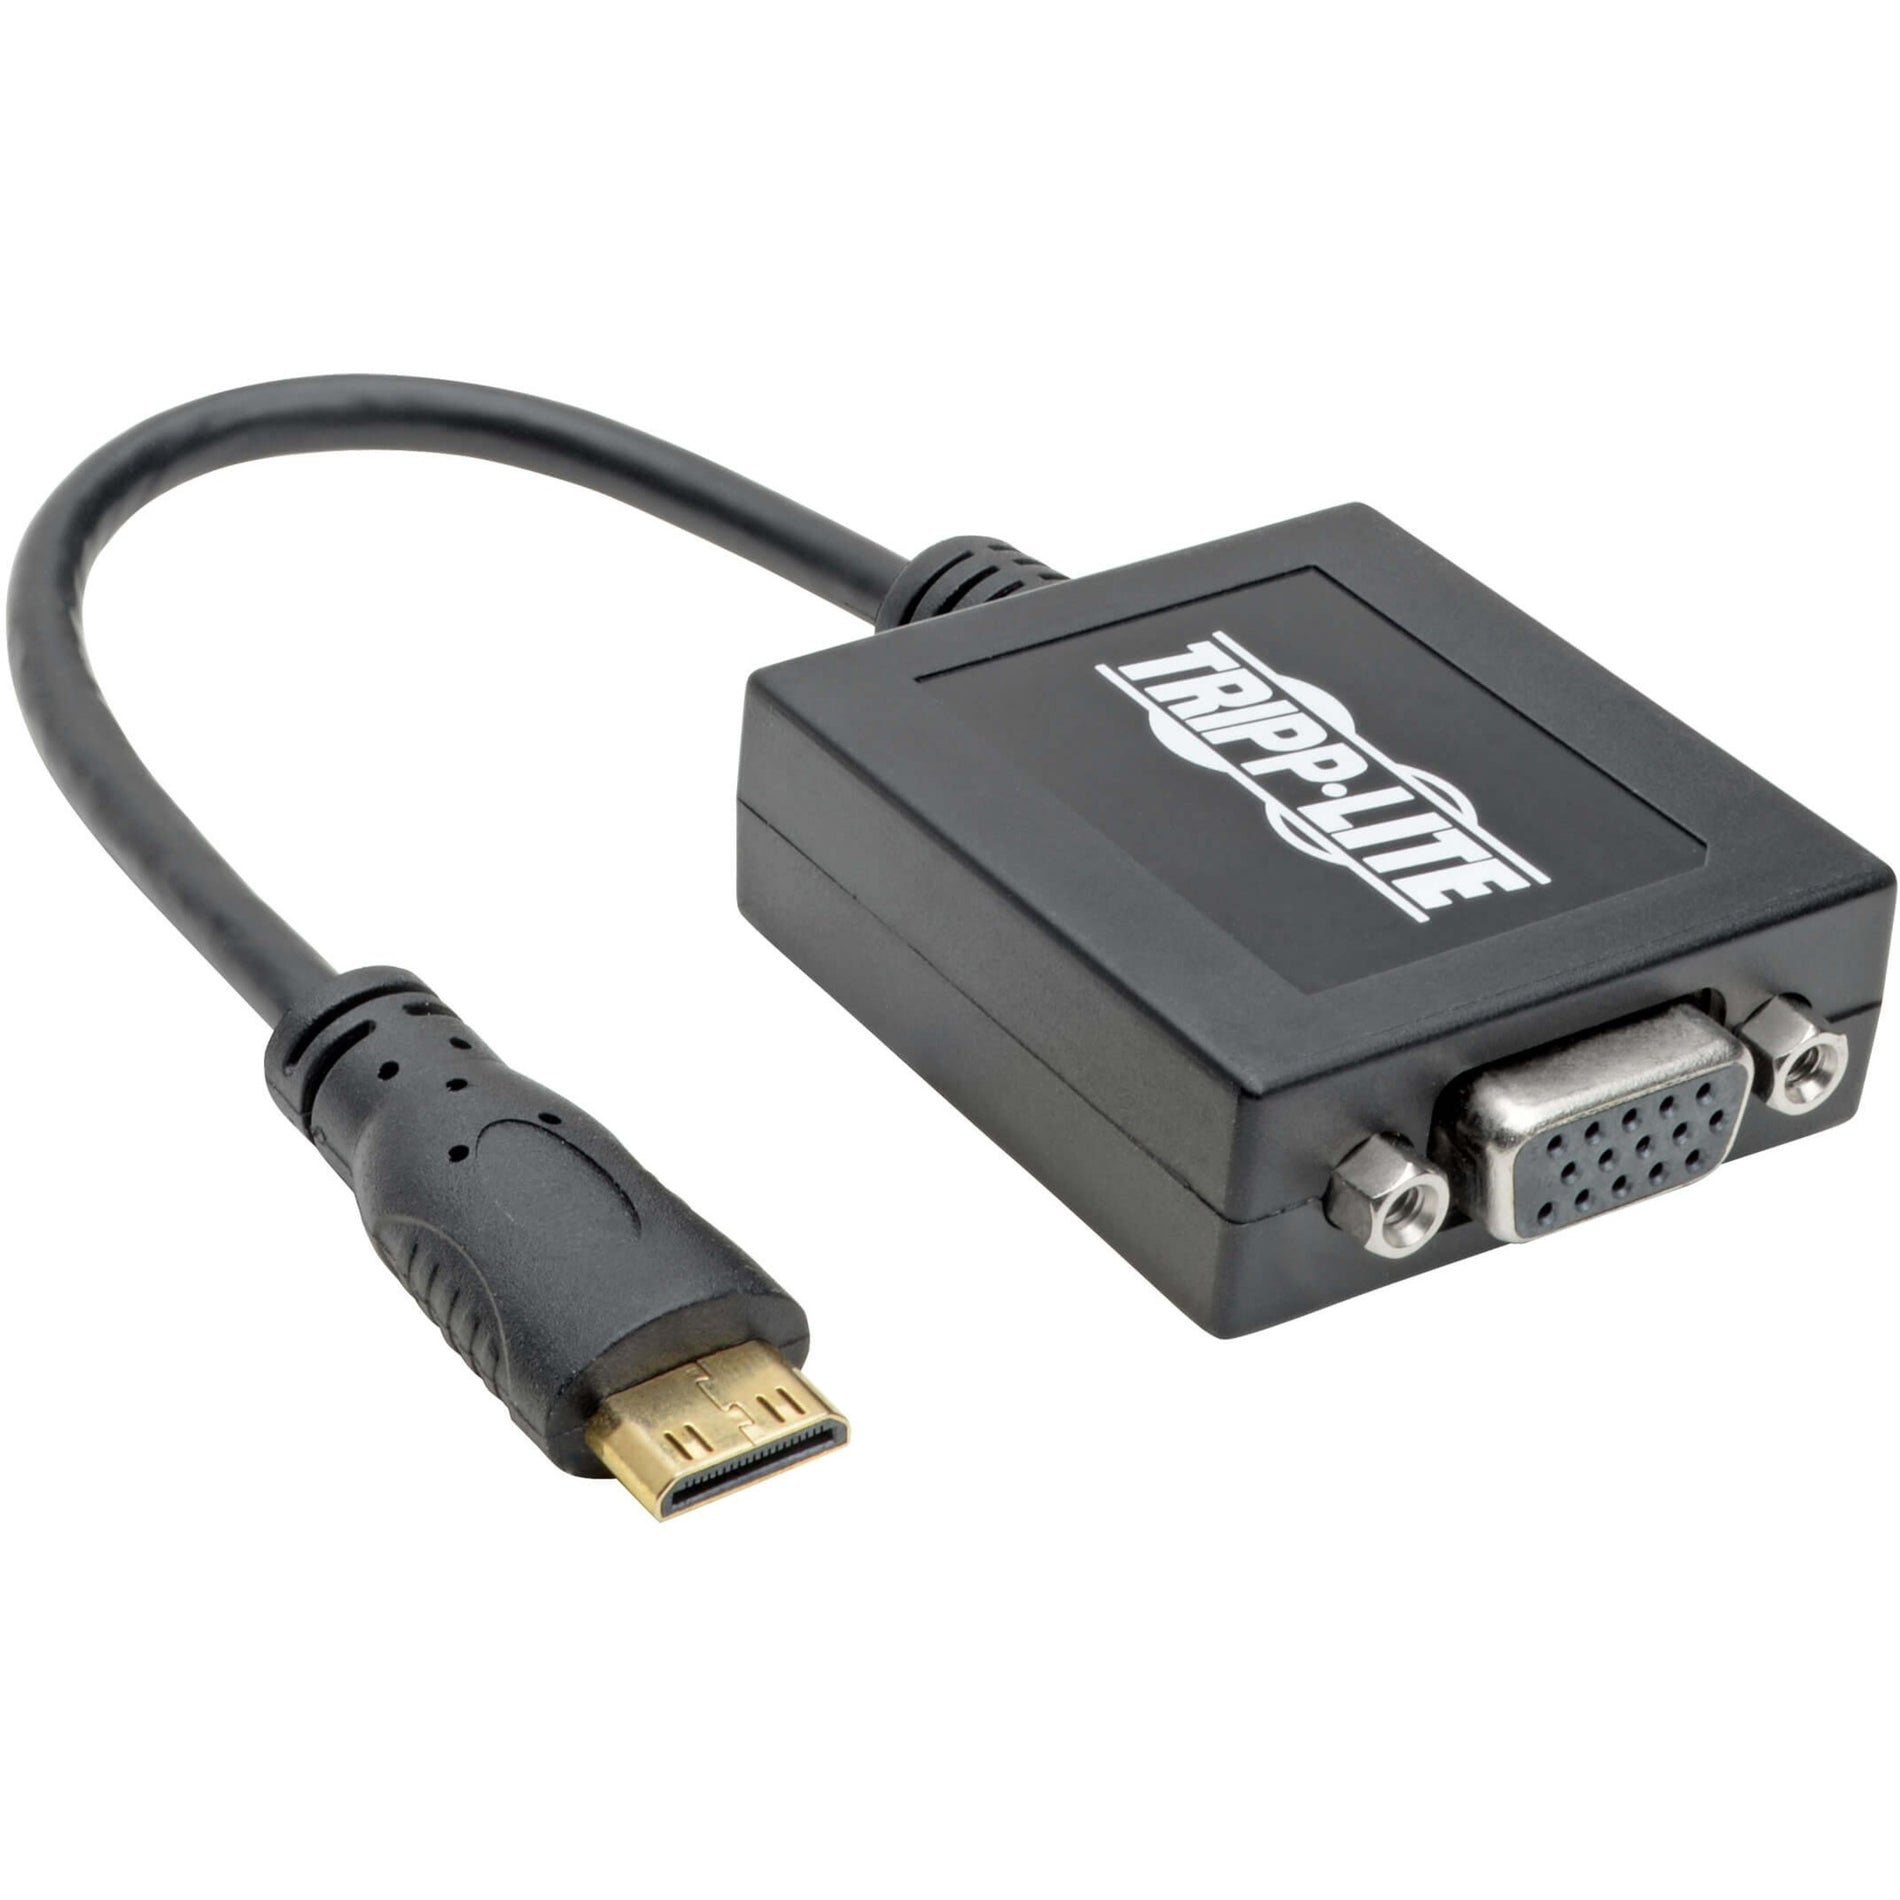 Tripp Lite P131-06N-MINI HDMI/VGA Video Cable, 6", Copper Conductor, TAA Compliant, RoHS Certified